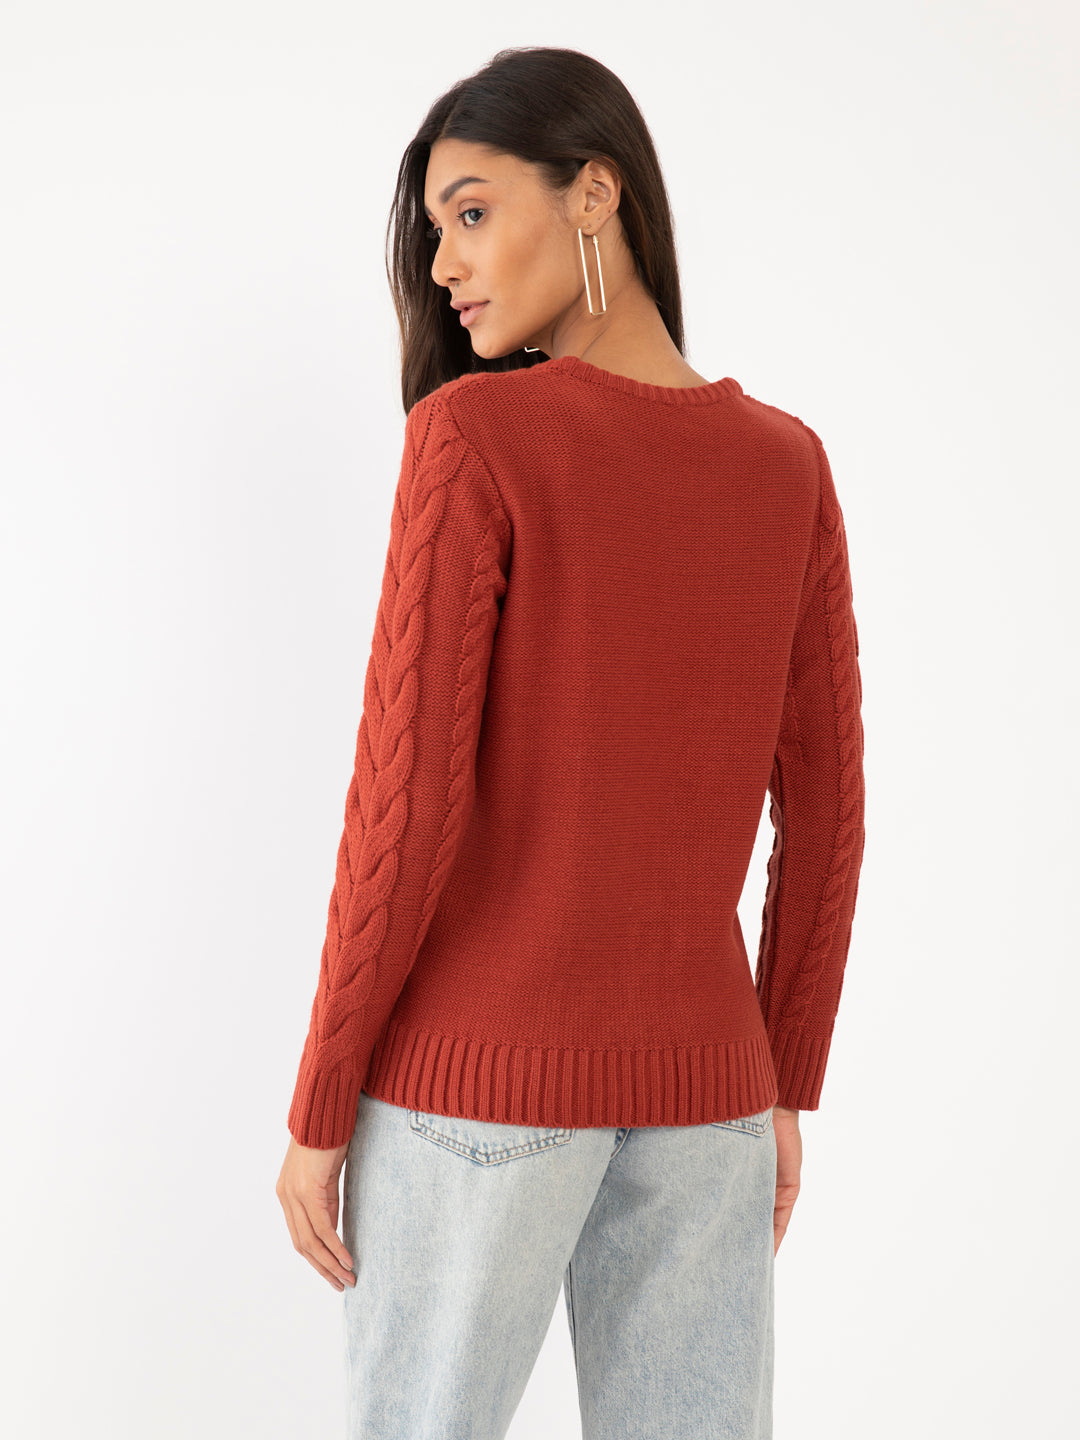 Orange Solid Sweater For Women